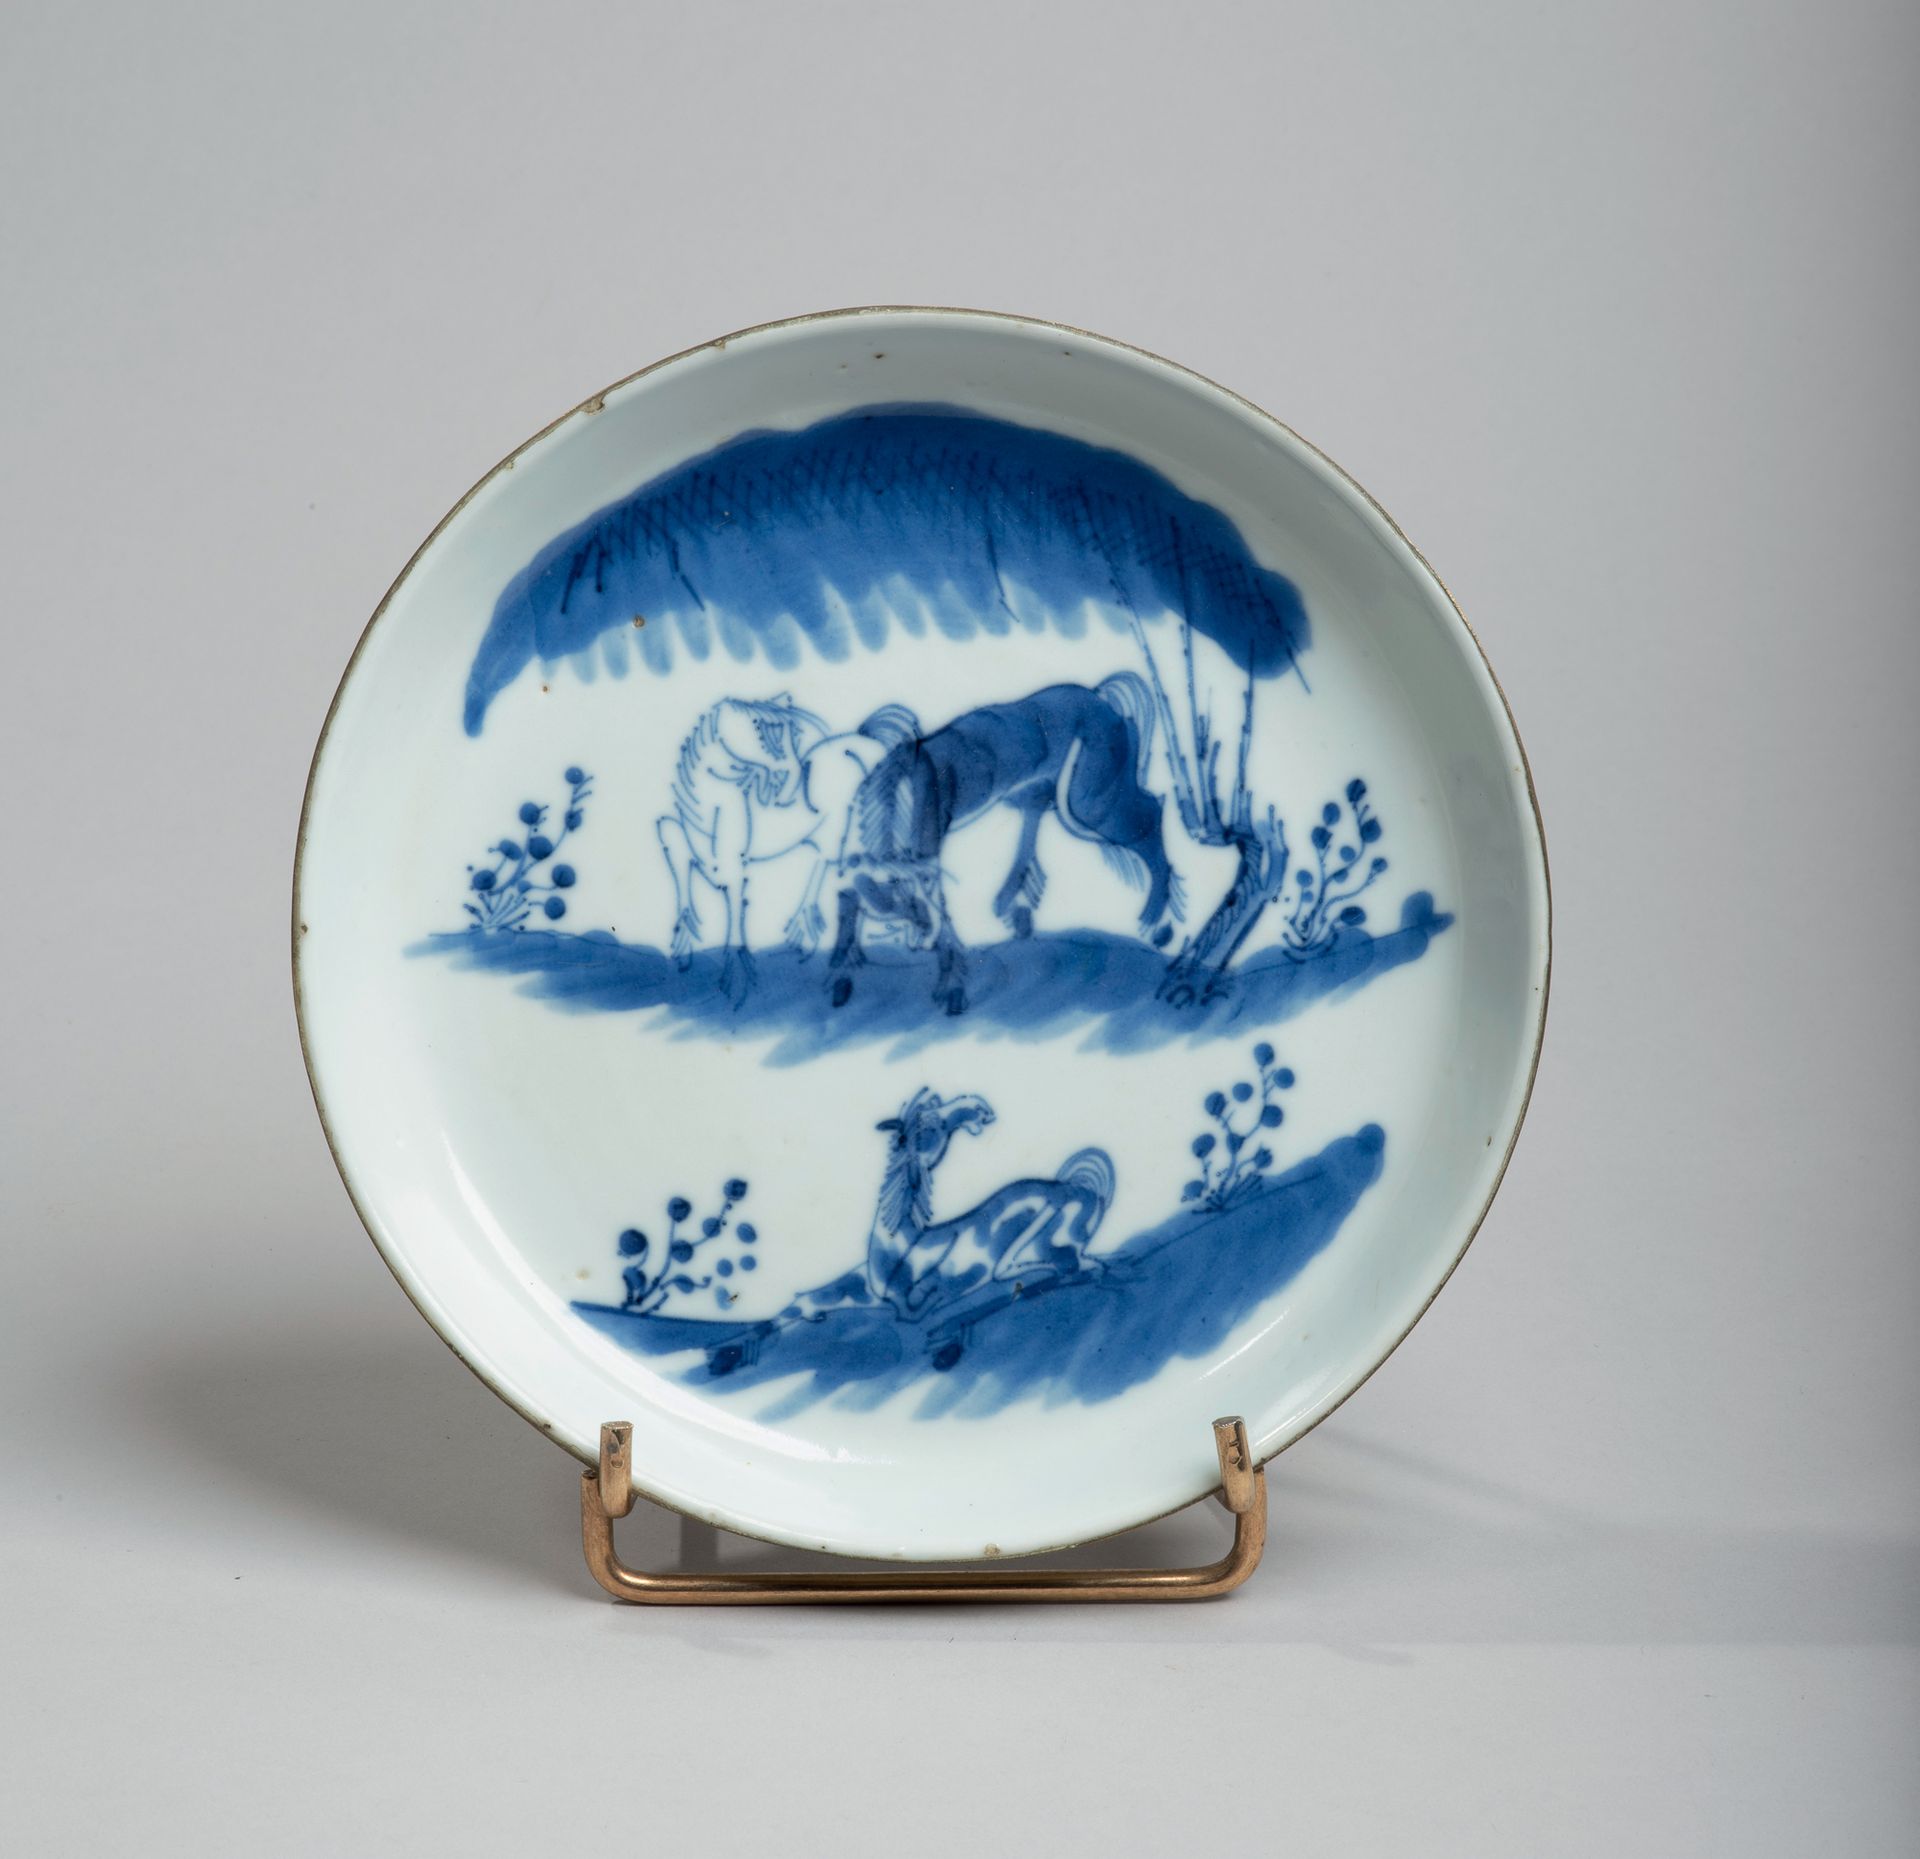 VIETNAM, Hue - XIXe siècle 
Porcelain bowl decorated in blue underglaze with thr&hellip;